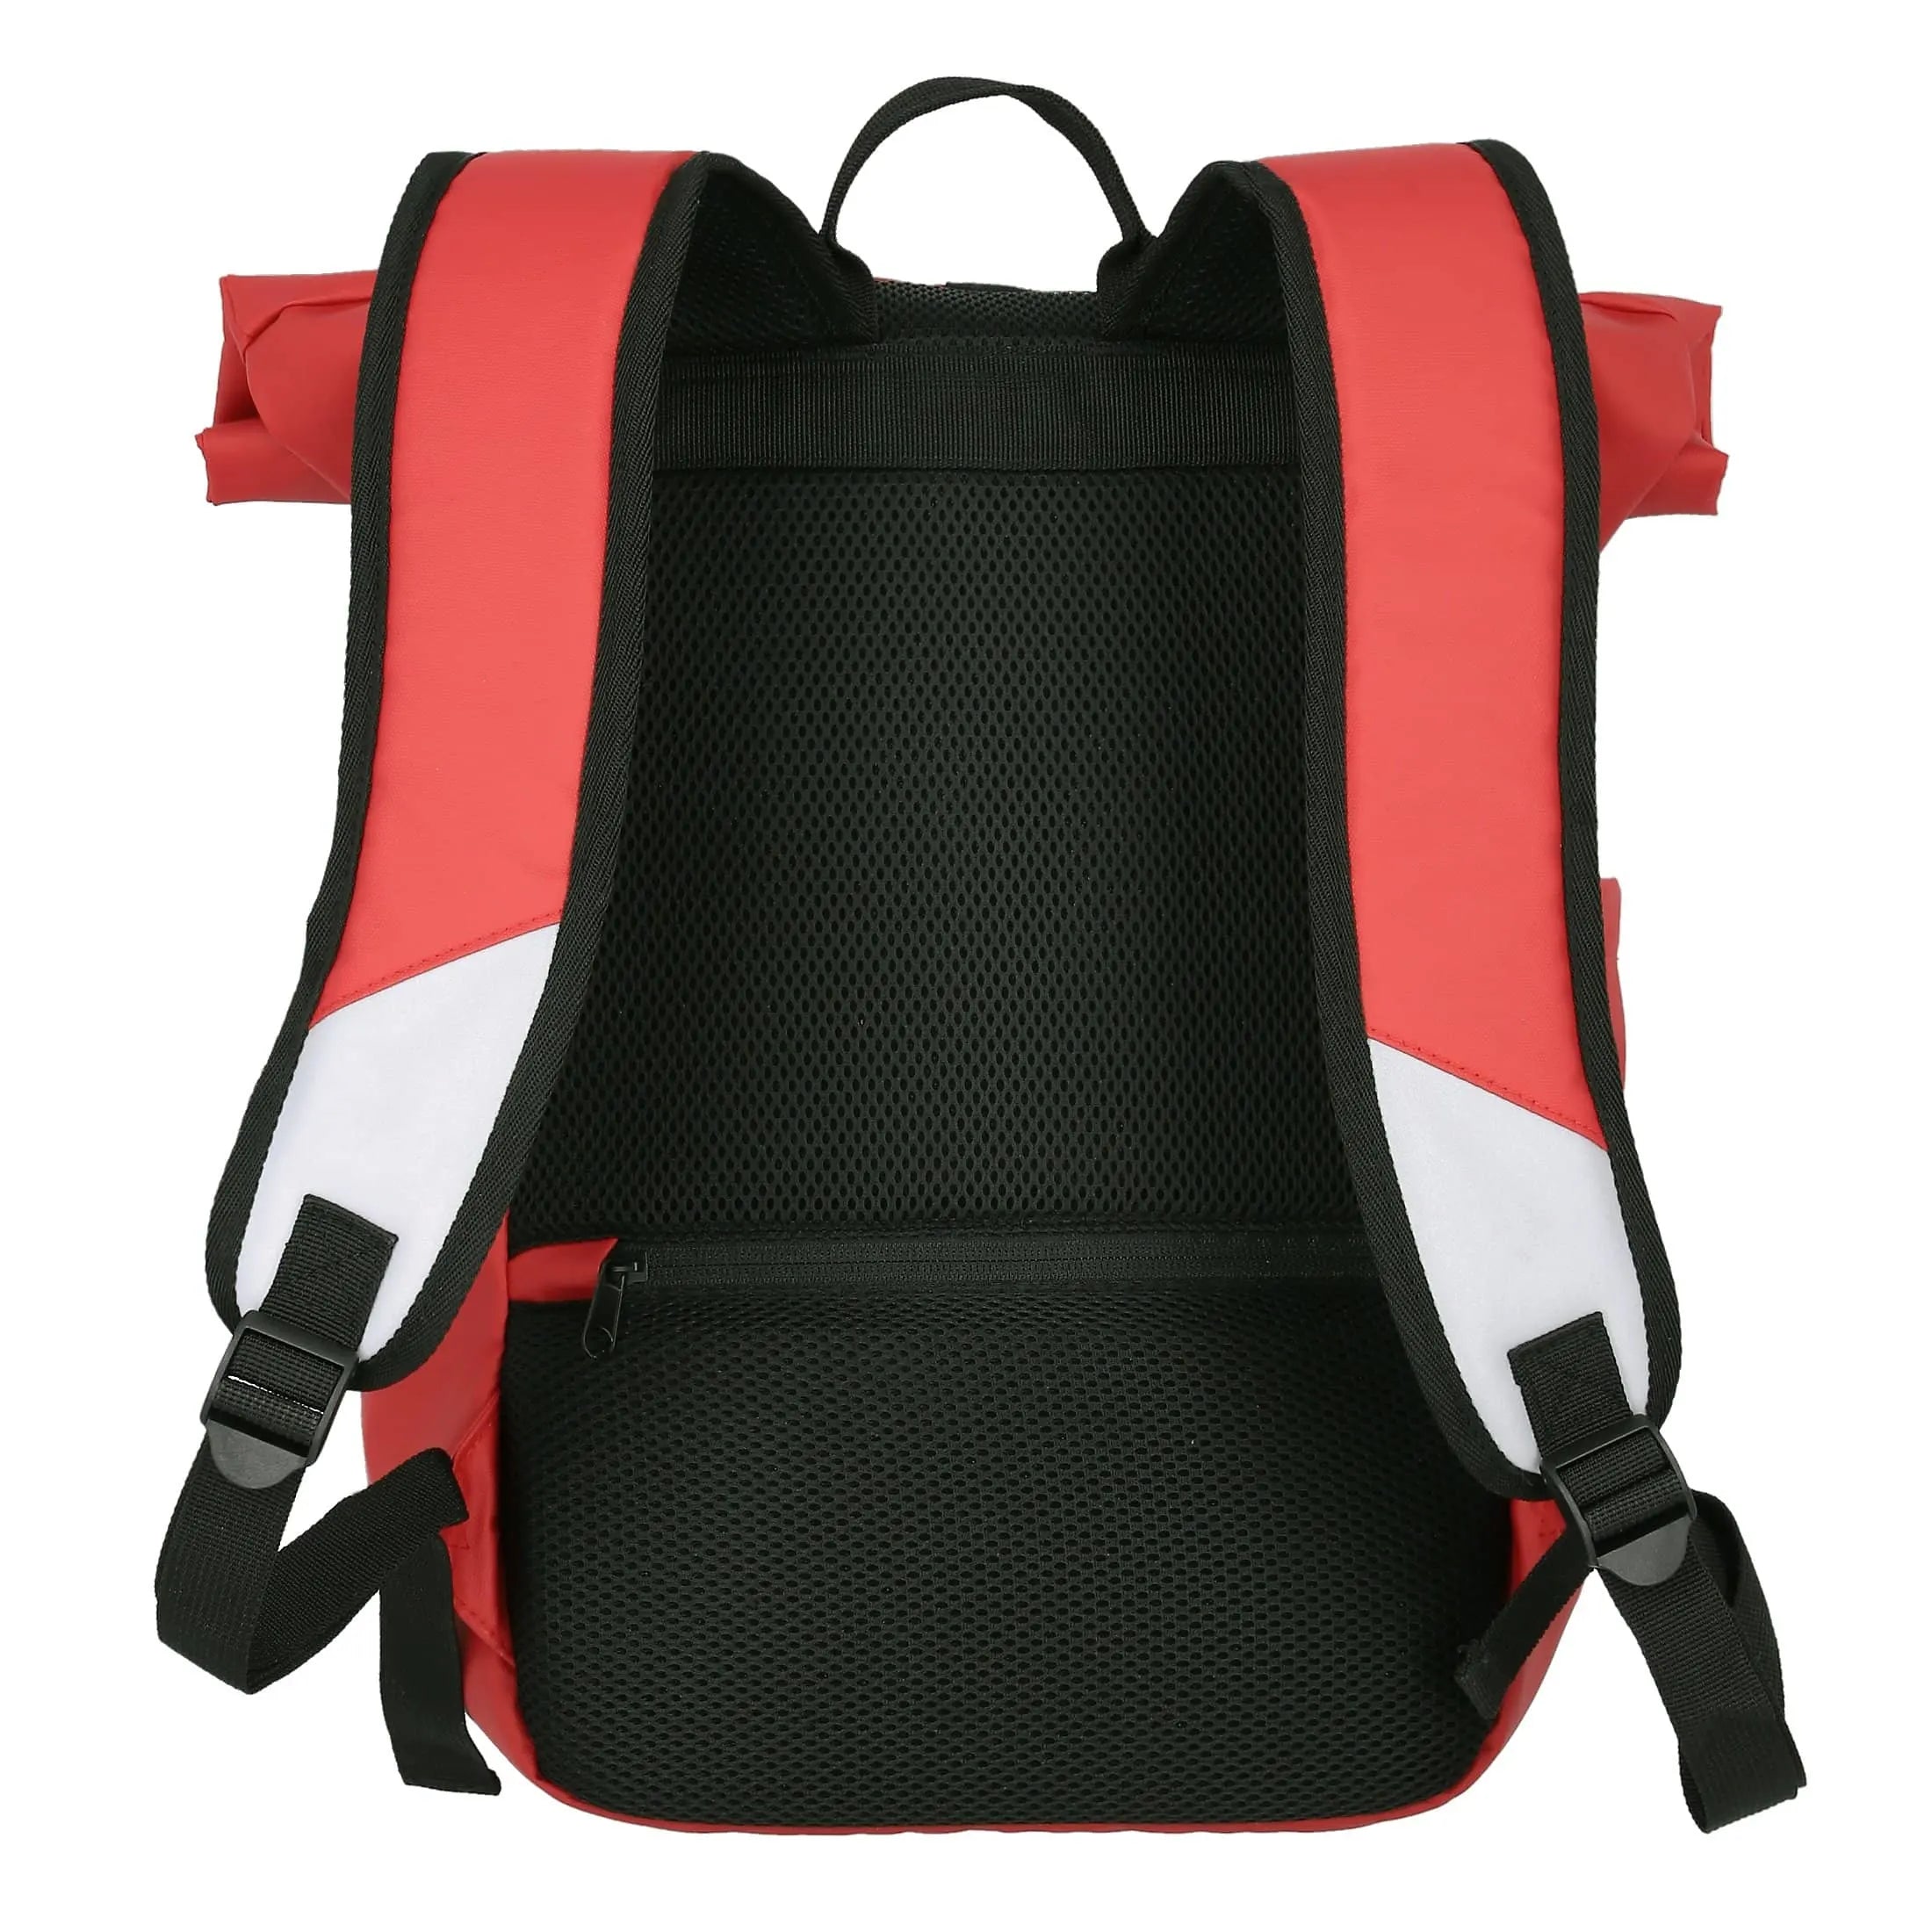 Travelite Basics Roll-Up Backpack Tarpaulin 48 cm - Coral